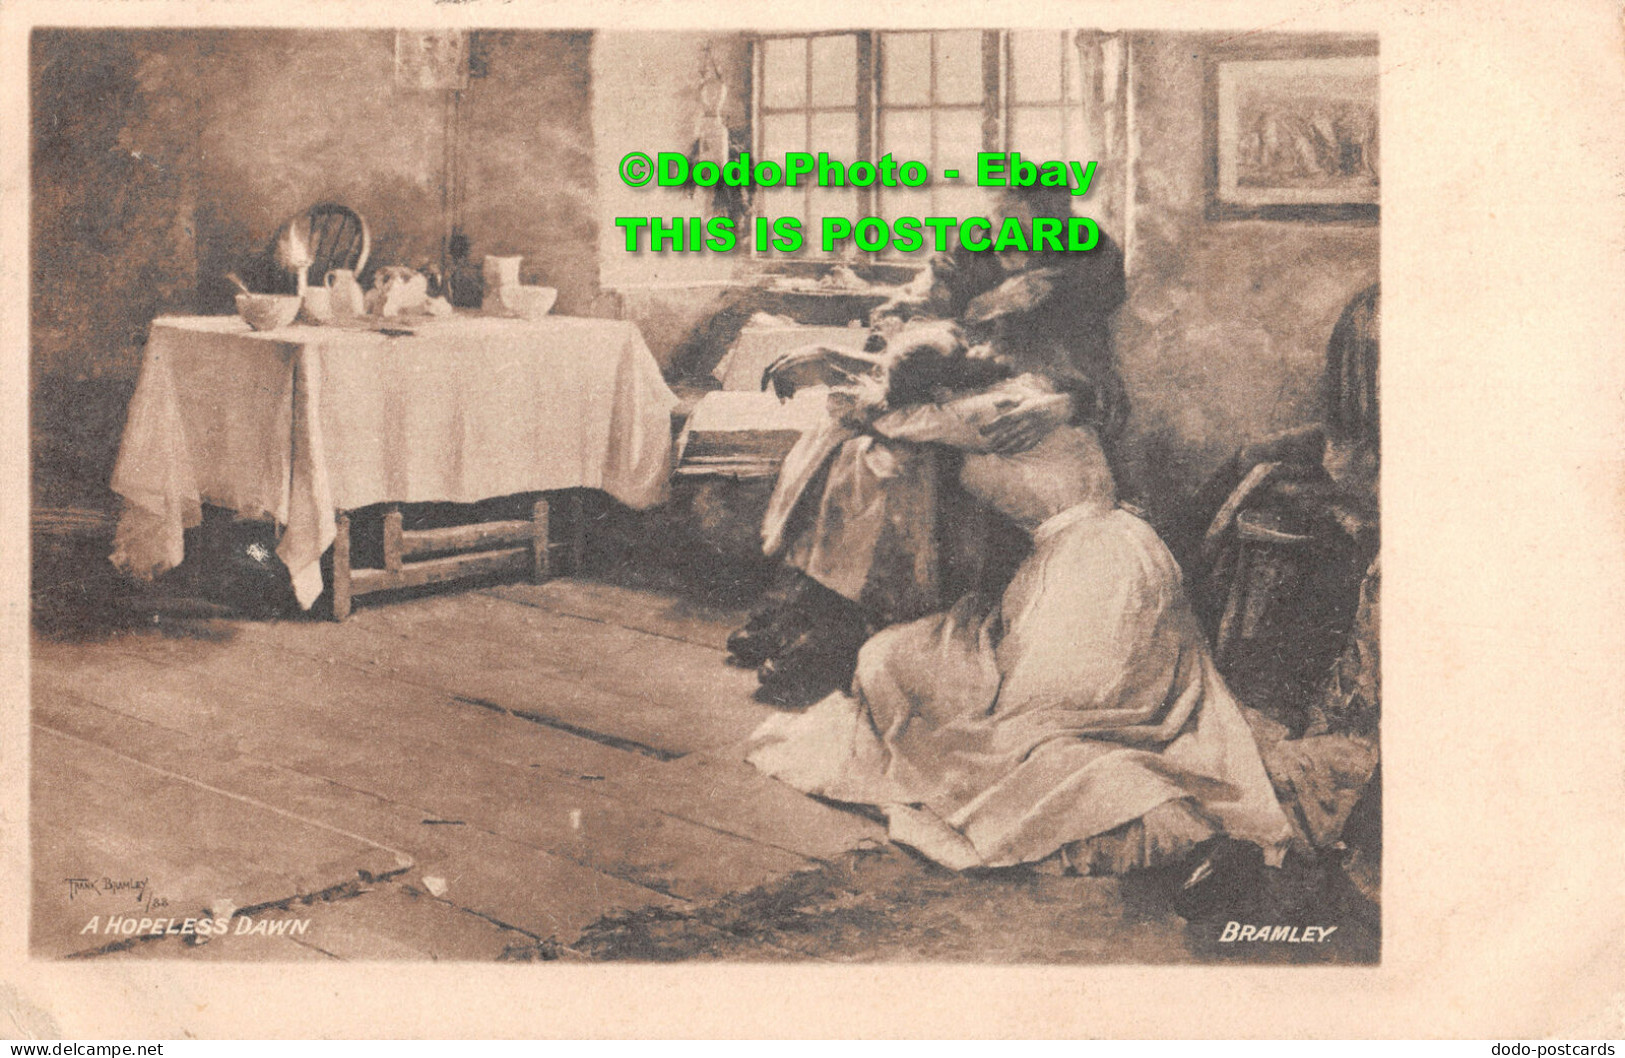 R392704 A Hopeless Dawn. Bramley. Postcard. 1904 - Mundo